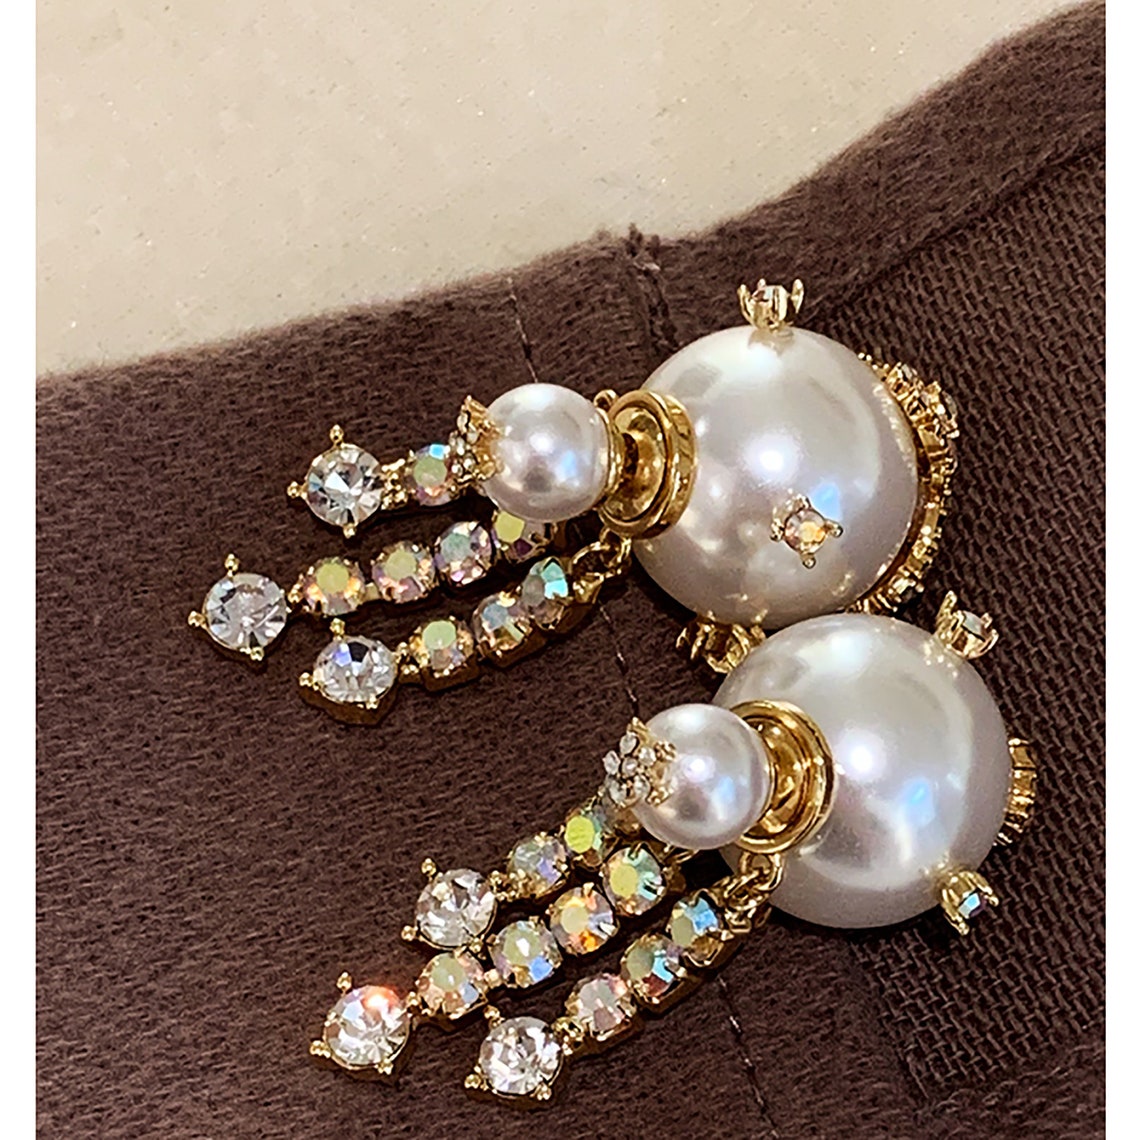 French earrings elegant earrings pearl earrings diamond | Etsy